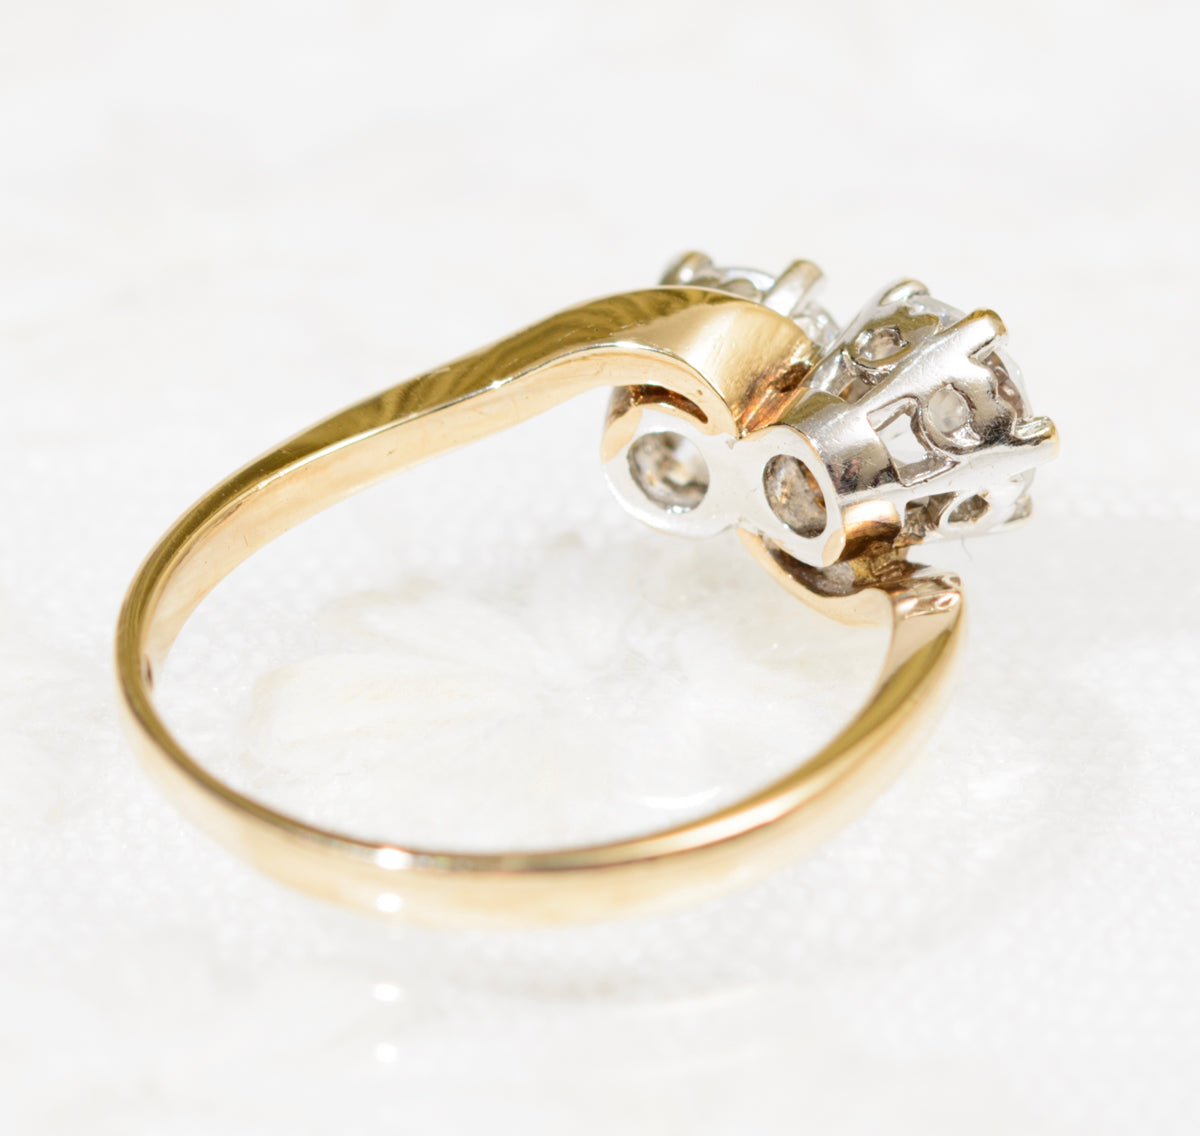 Vintage 9ct Gold Ring Toi et Moi Design With 5.5mm CZ Gemstones UK Size M (A1925)